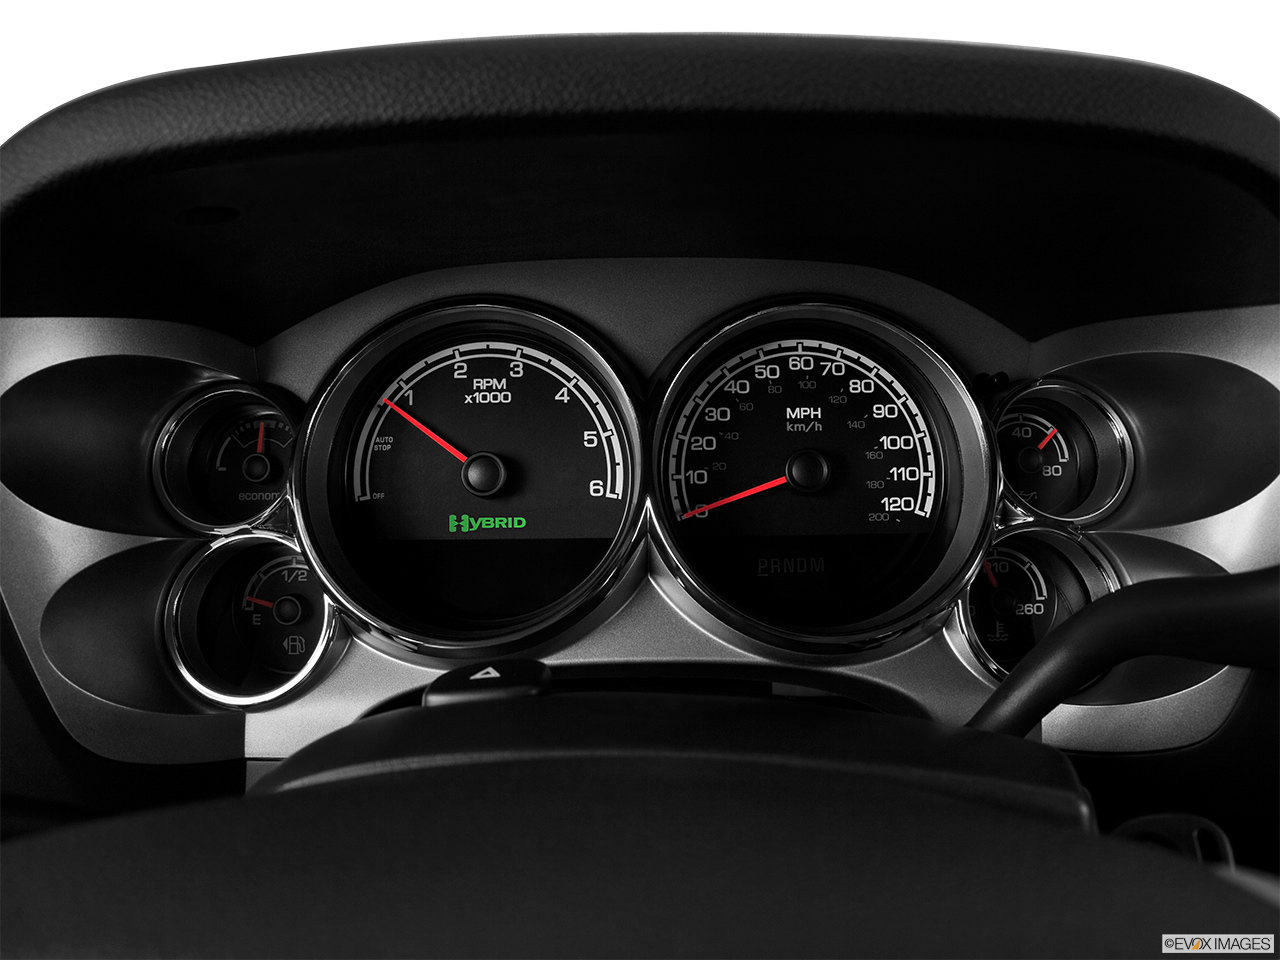 2013 GMC Sierra 1500 Hybrid 3HA Speedometer/tachometer. 